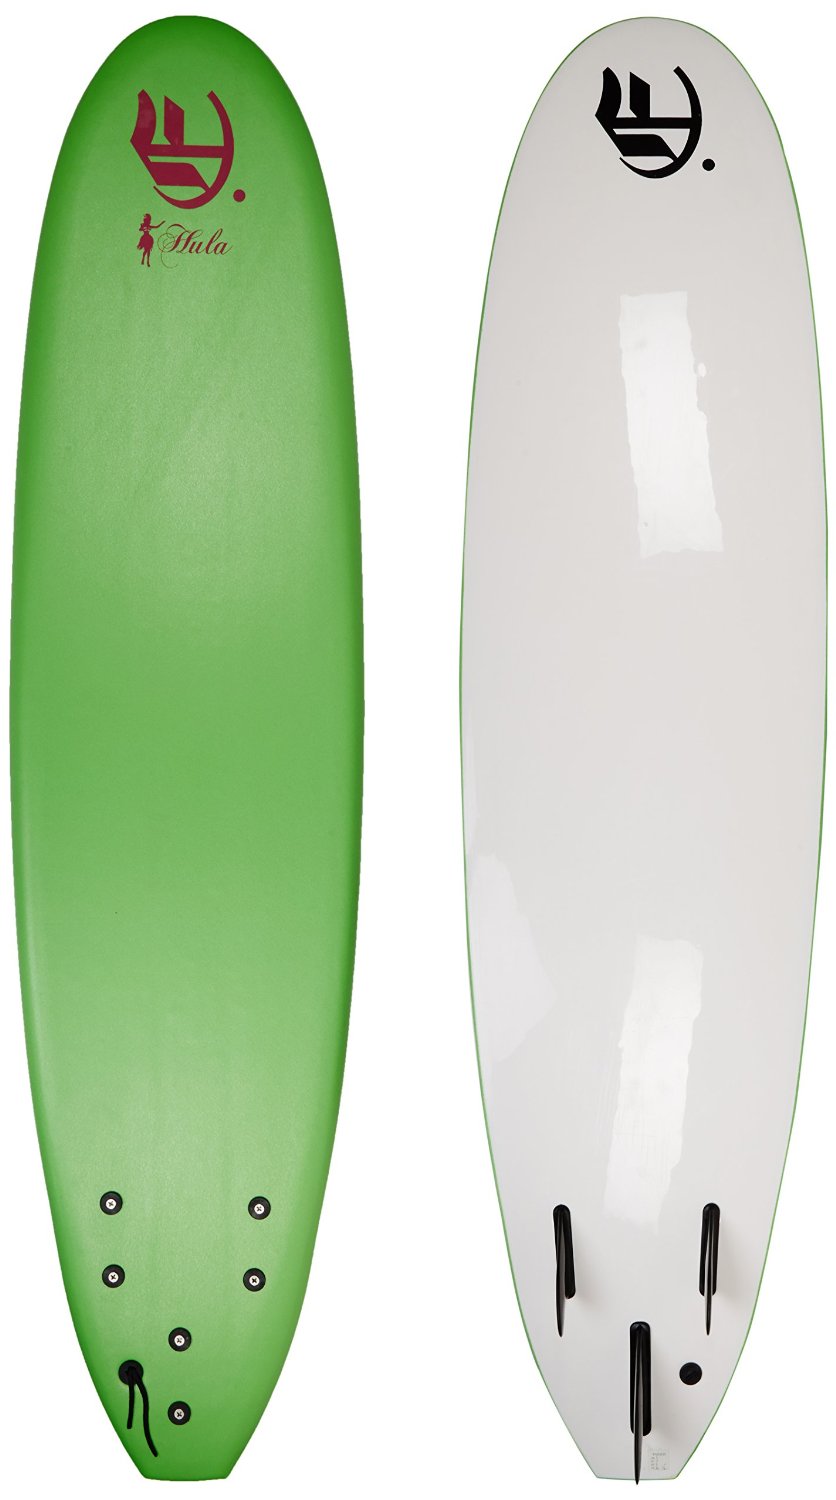 Empire 7' Hula Soft Surfboard